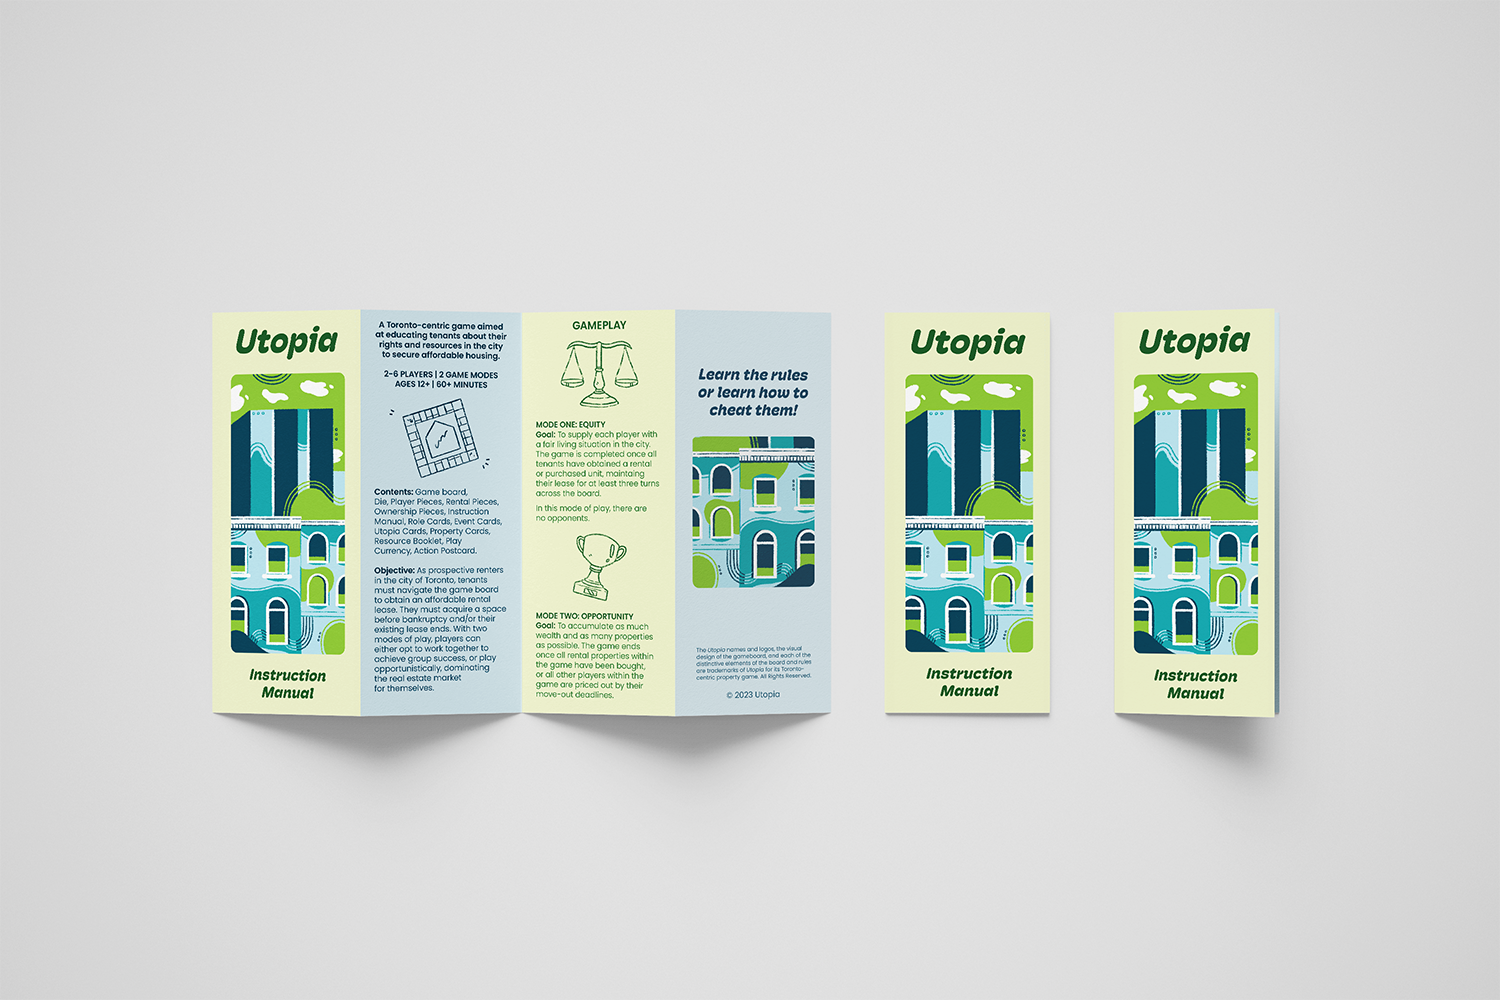 Utopia Instruction Manual